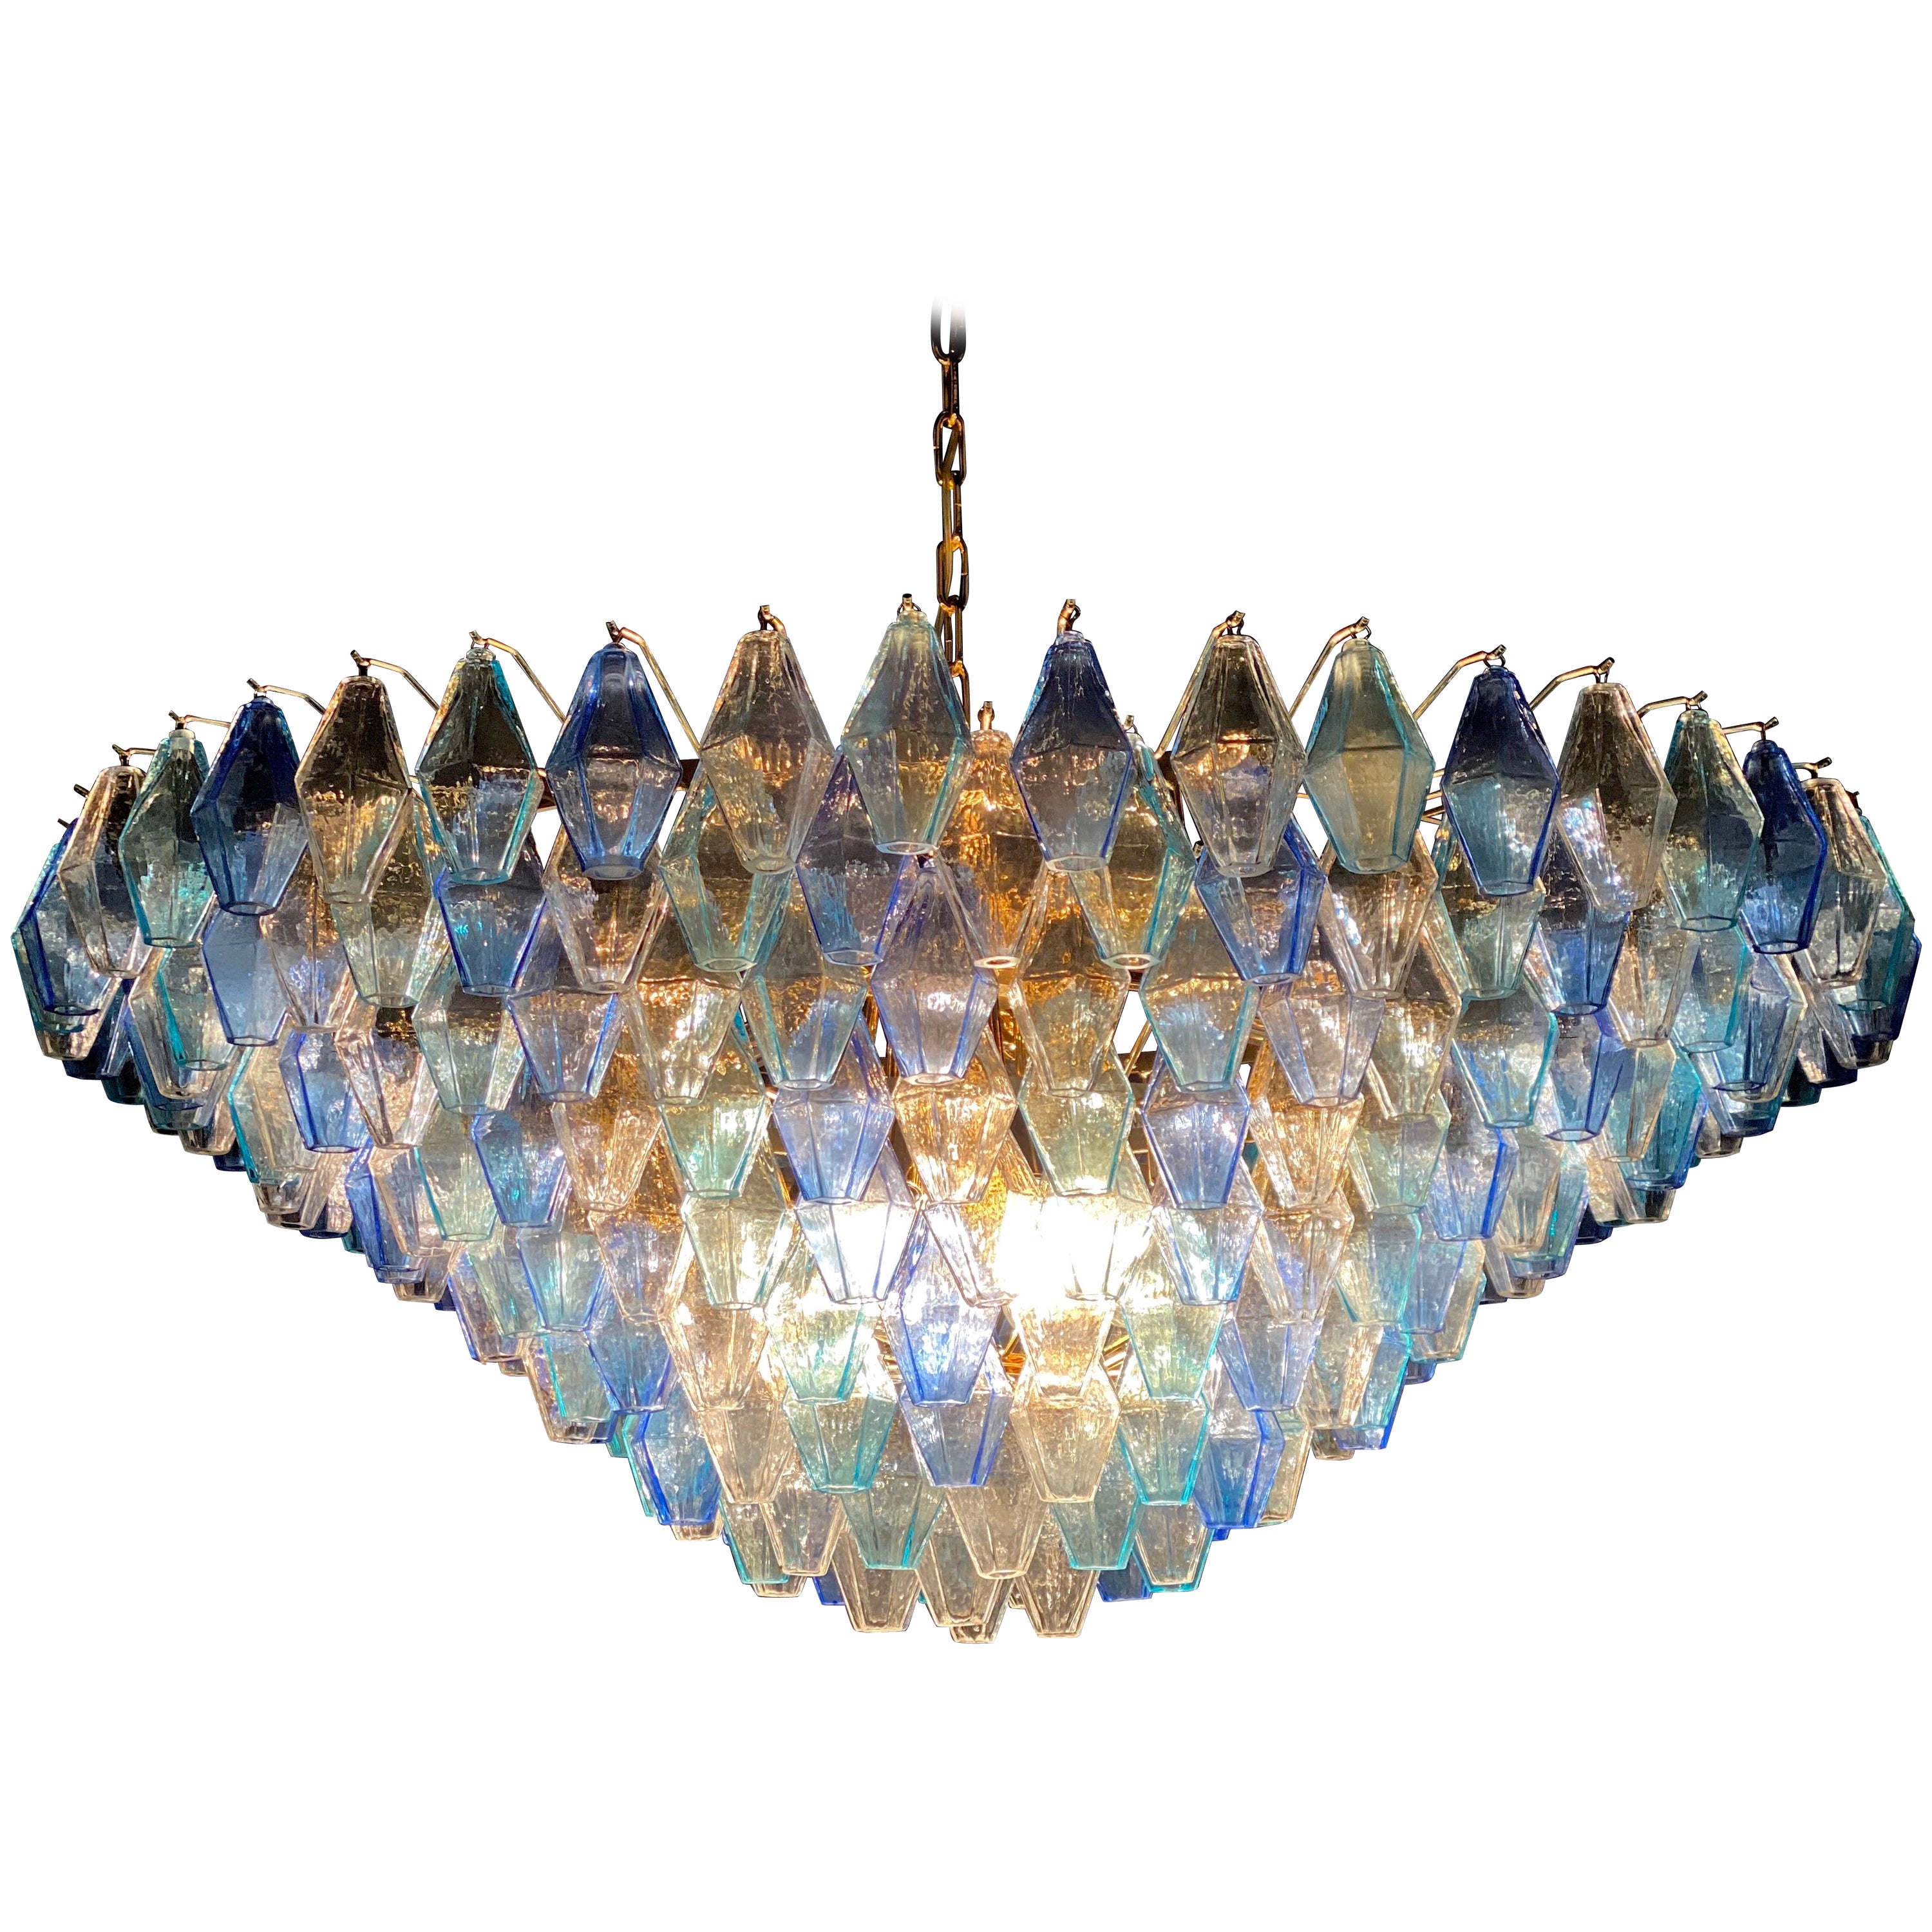 Extraordinaire plafonnier ou lustre en verre de Murano Poliedri de couleur saphir en vente